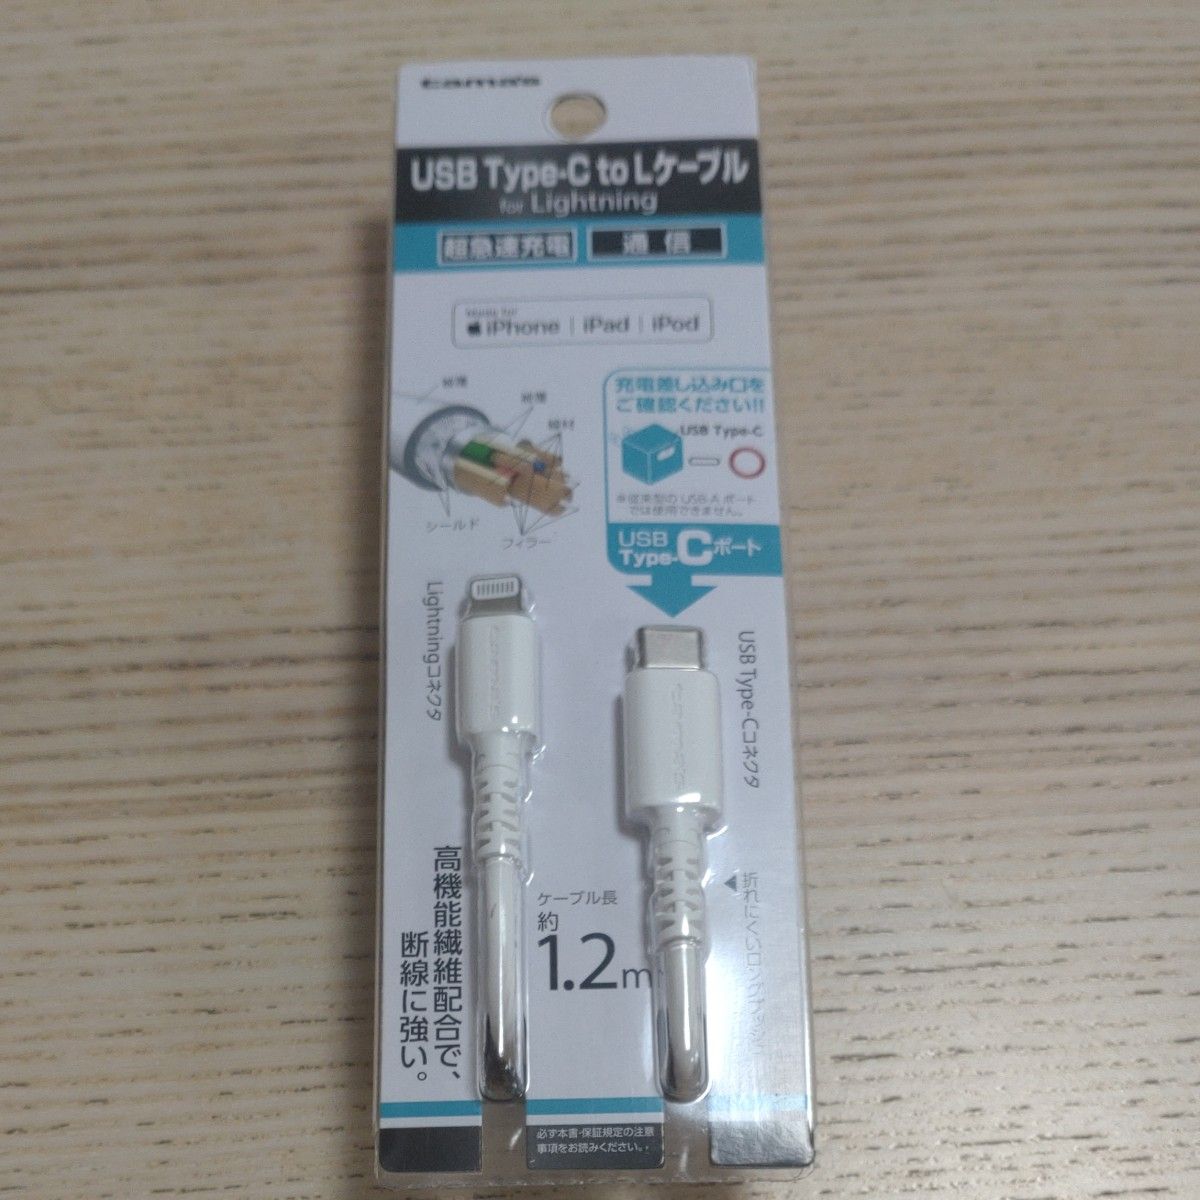 USB Type-C to Lケーブル 1.2m AH212LC12W